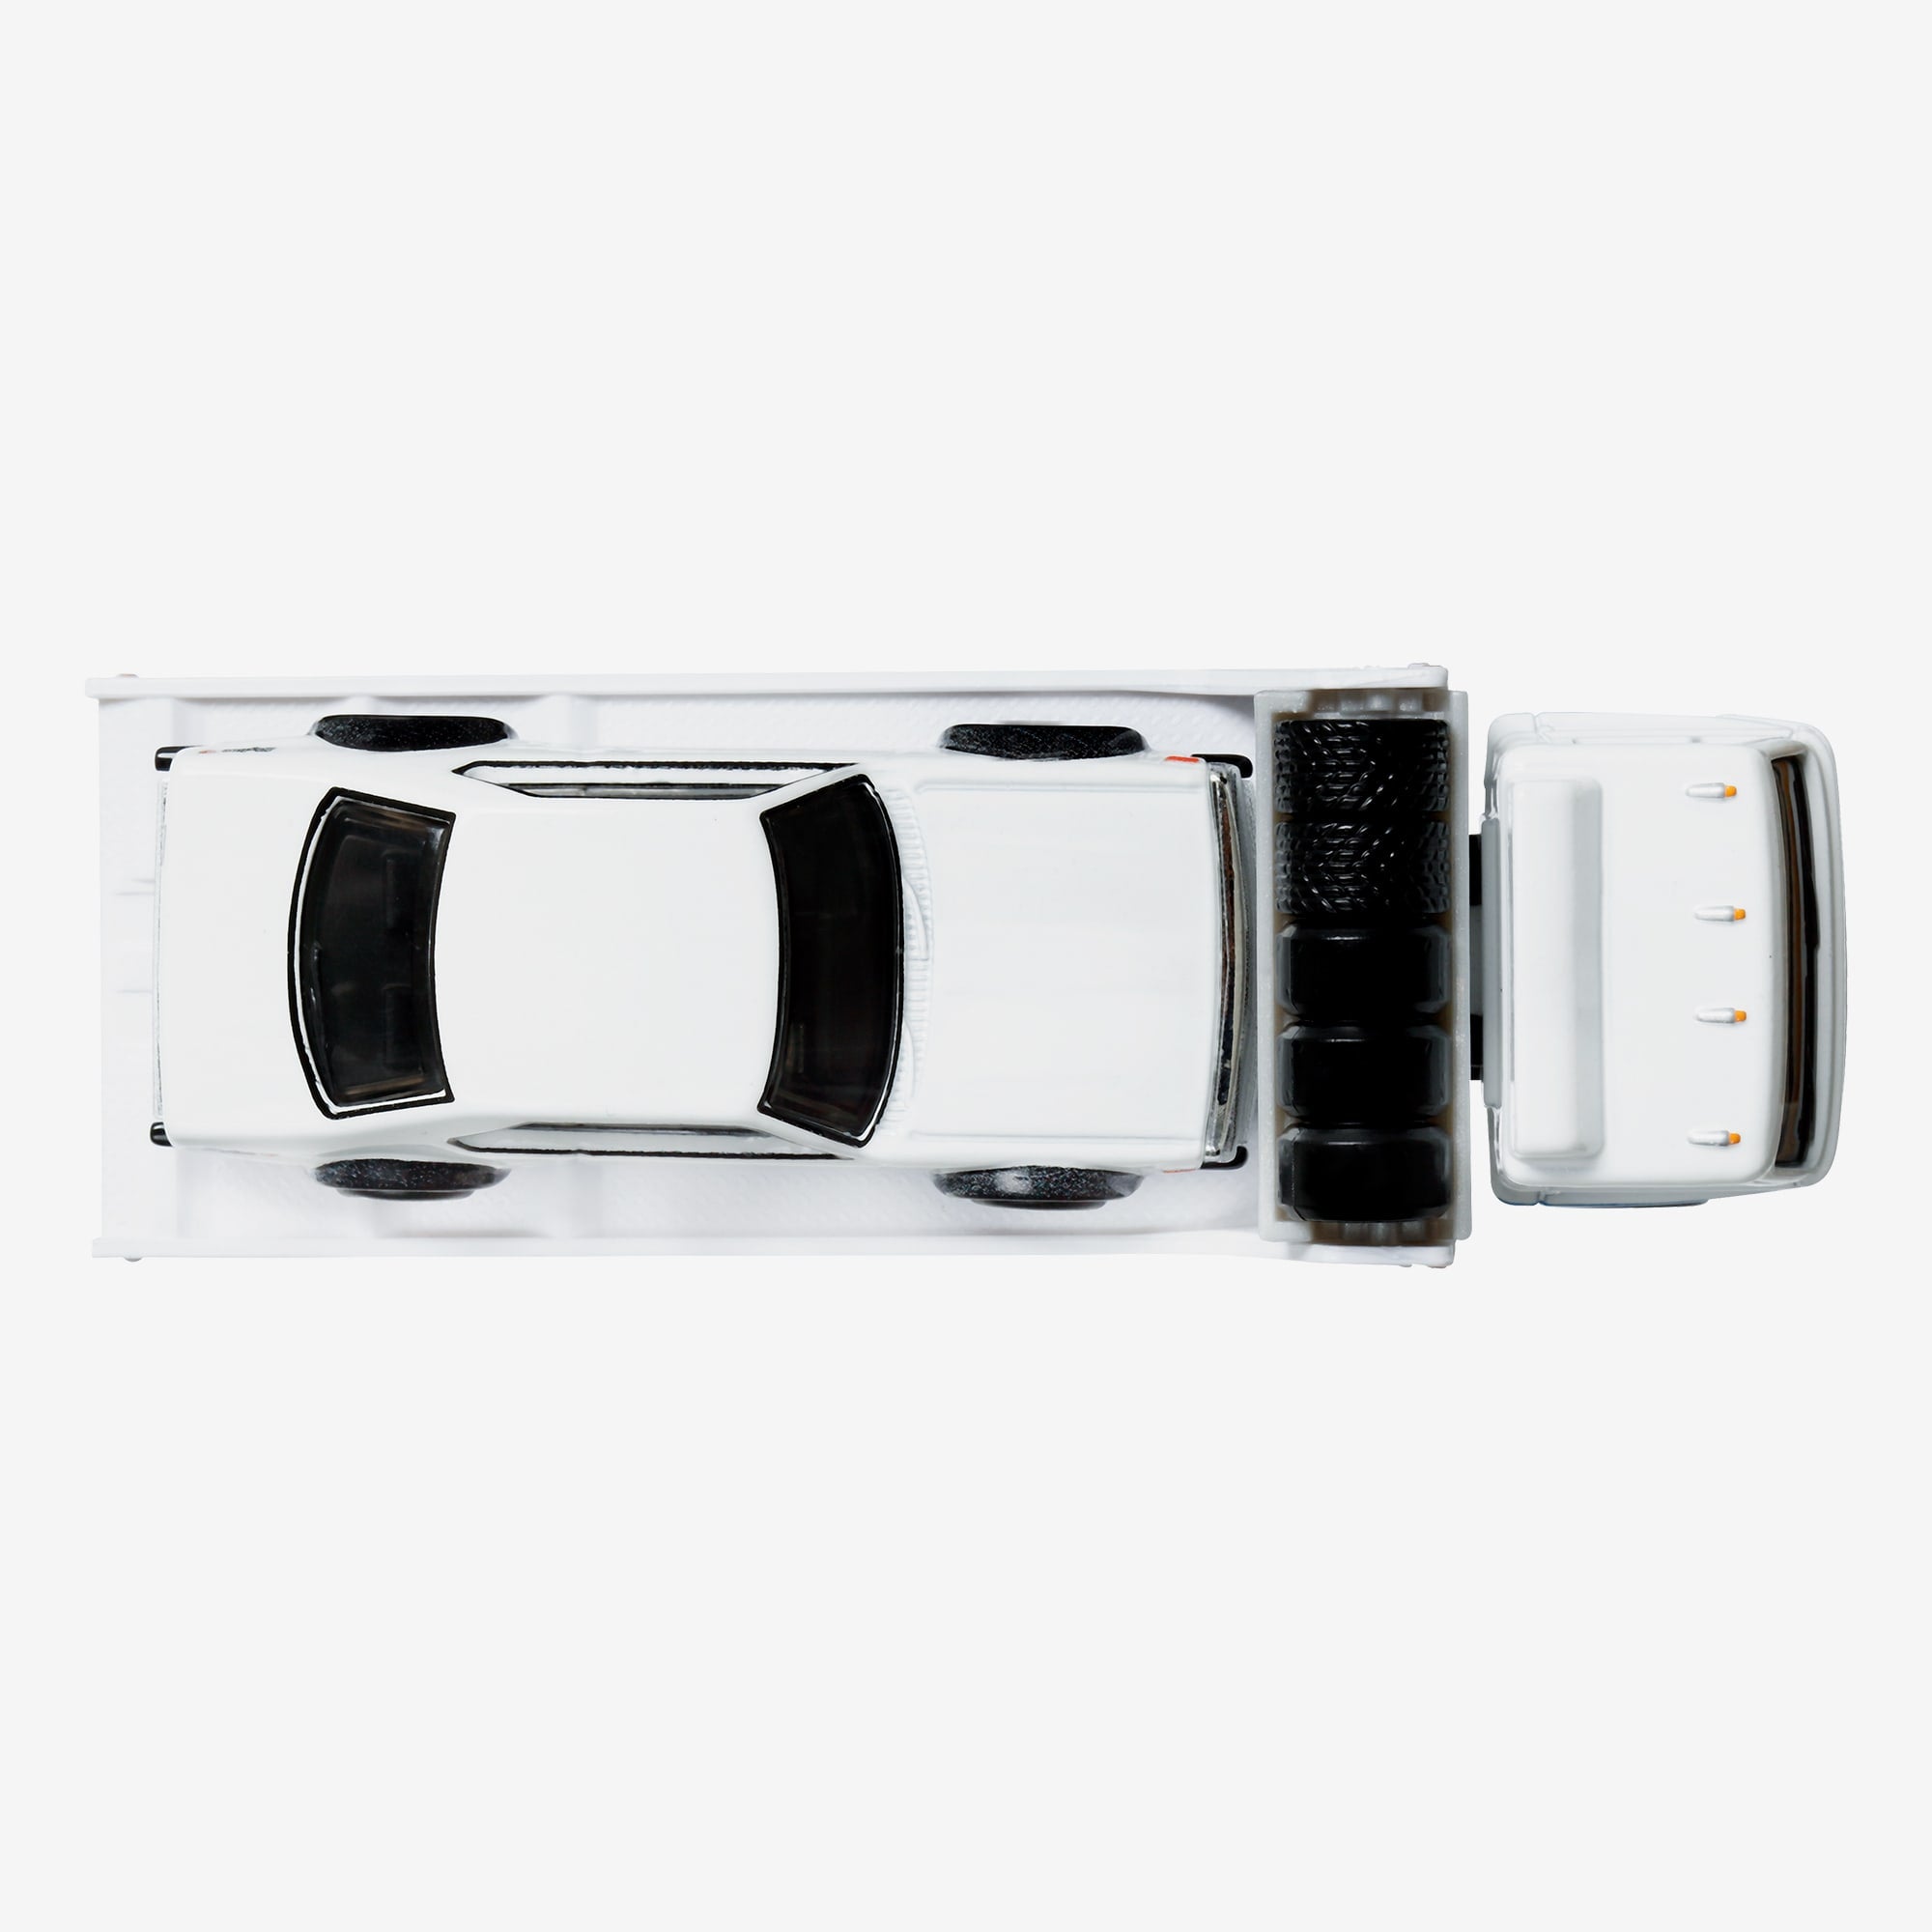 Hot Wheels 2023 Premium Nissan Skyline Diorama Set - SS23 - US